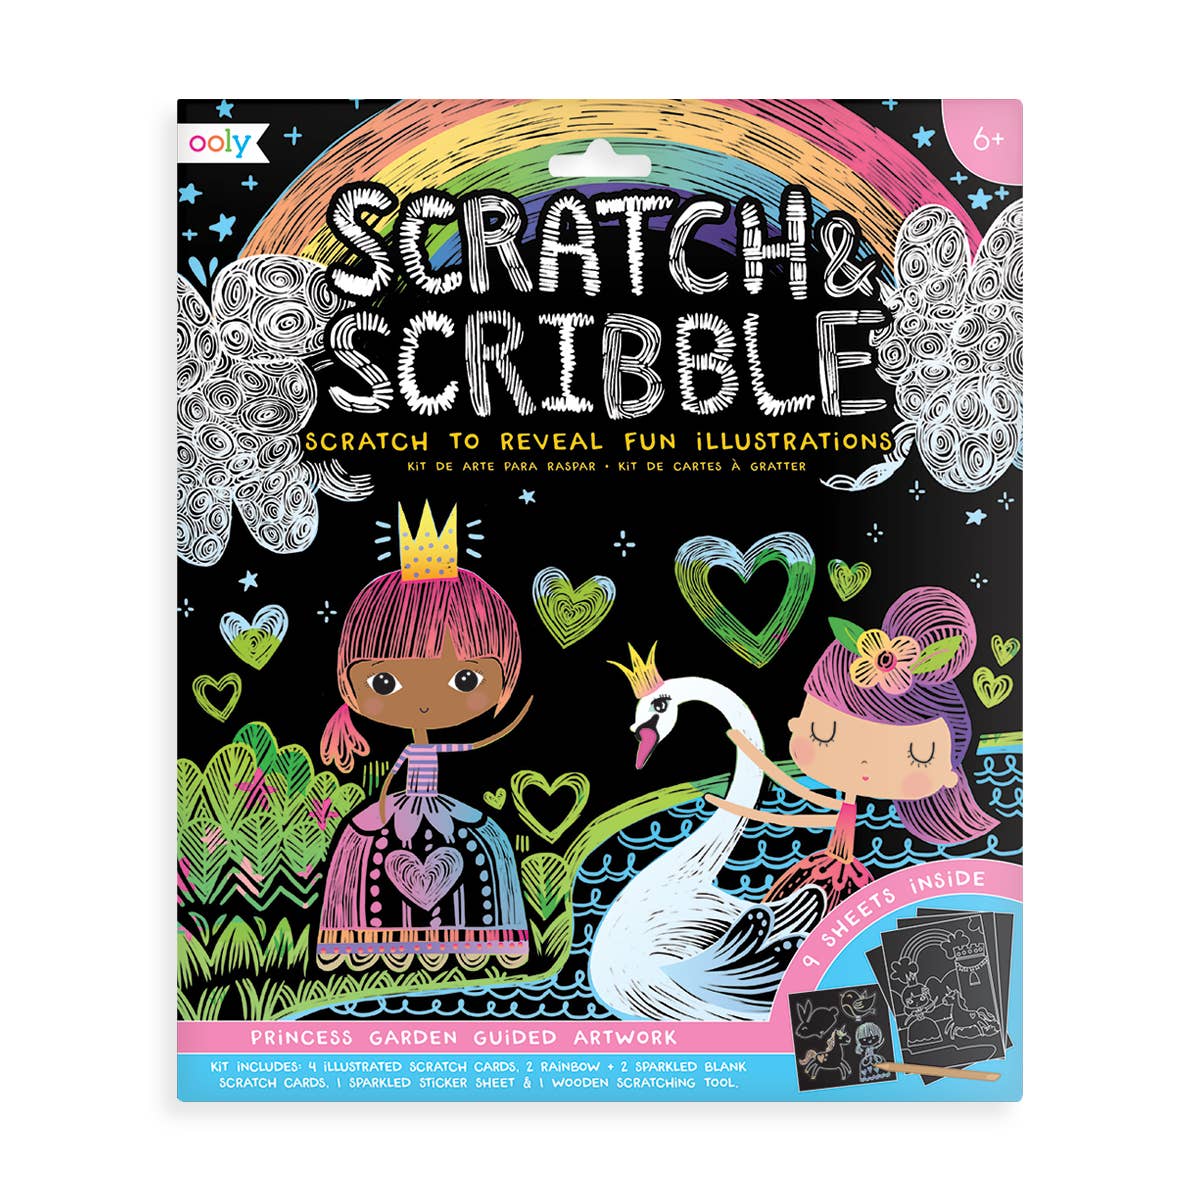 Scratch & Scribble Art Kit from Favorite Little Things